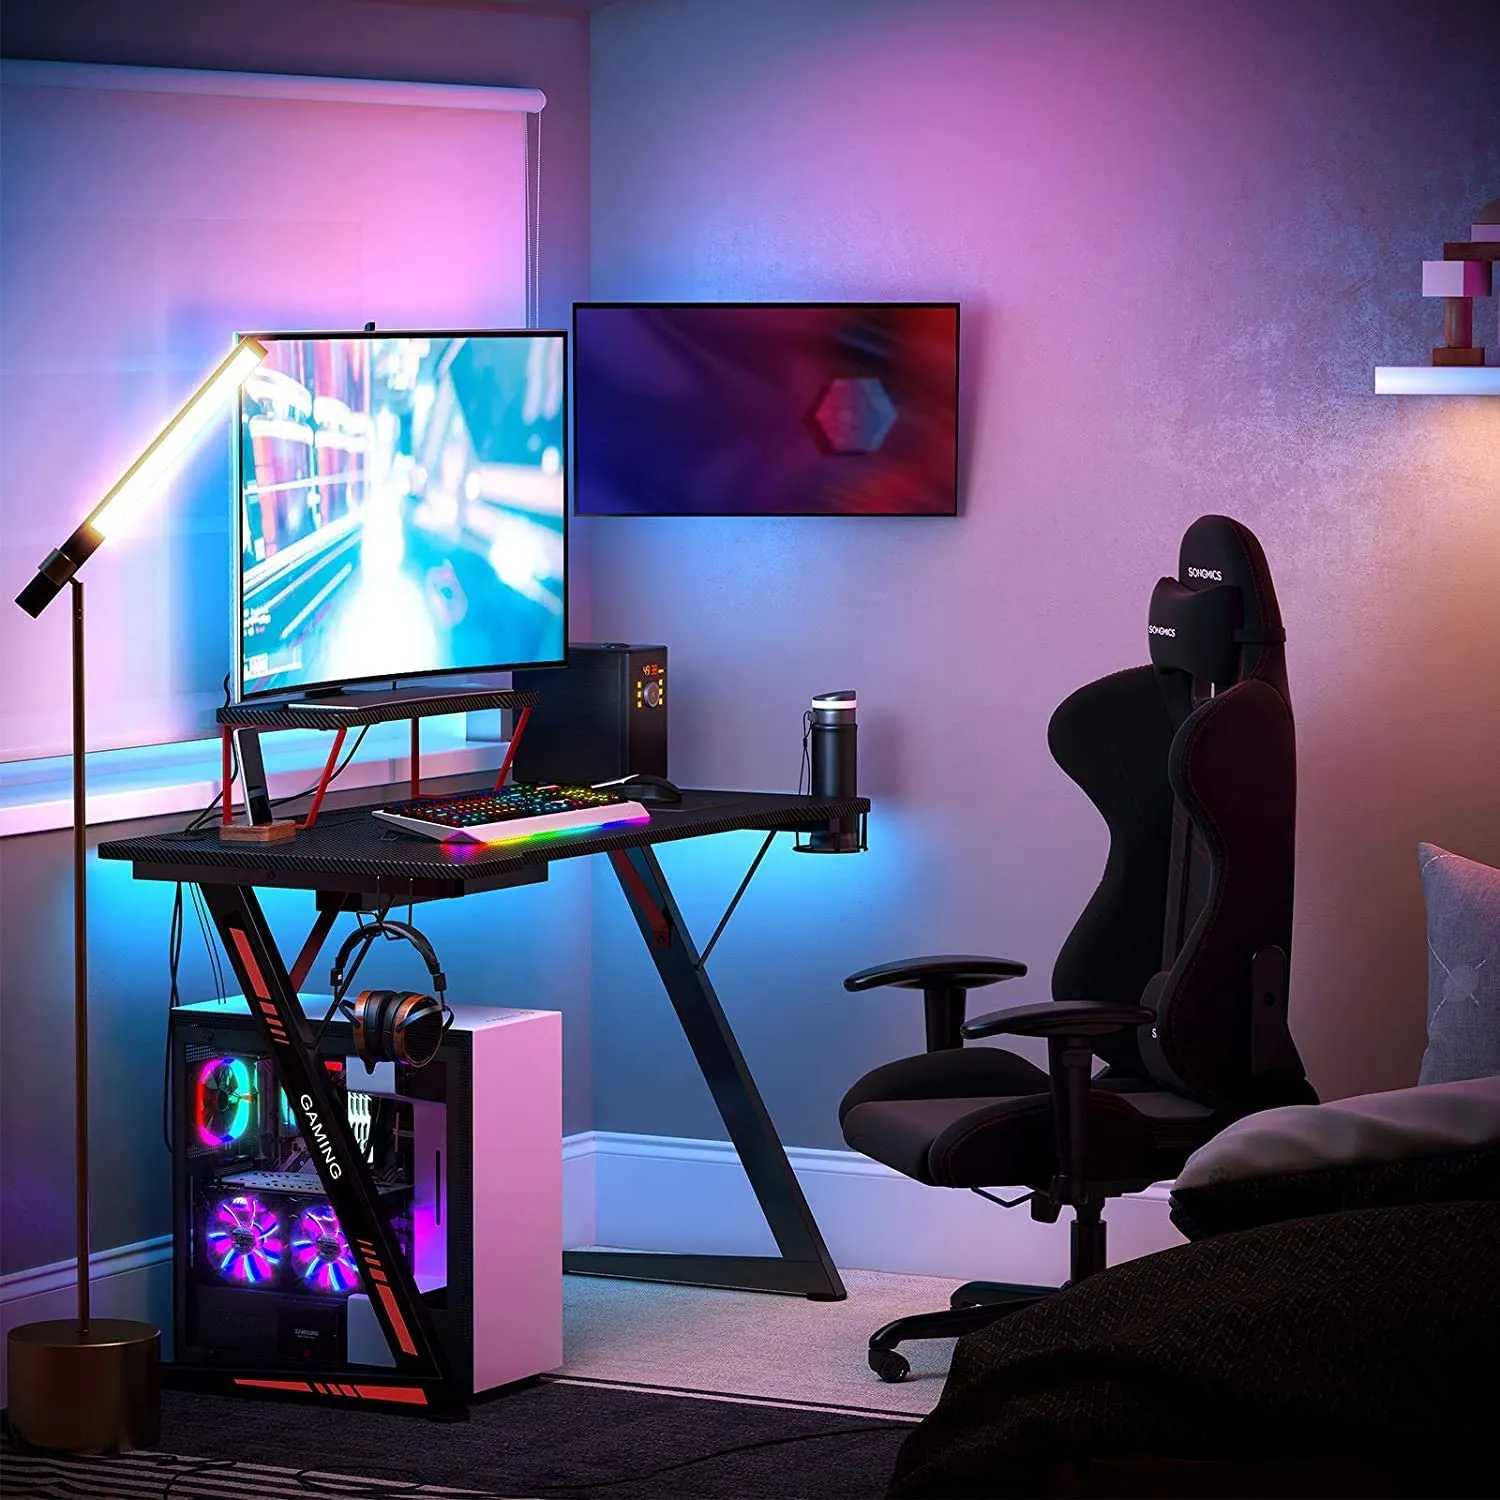 Bulk Order,Bedroom Furniture,Gaming Desk, Computer Desk, with Monitor Stand, Cup Holder, Headphone Hook, Multifunctional